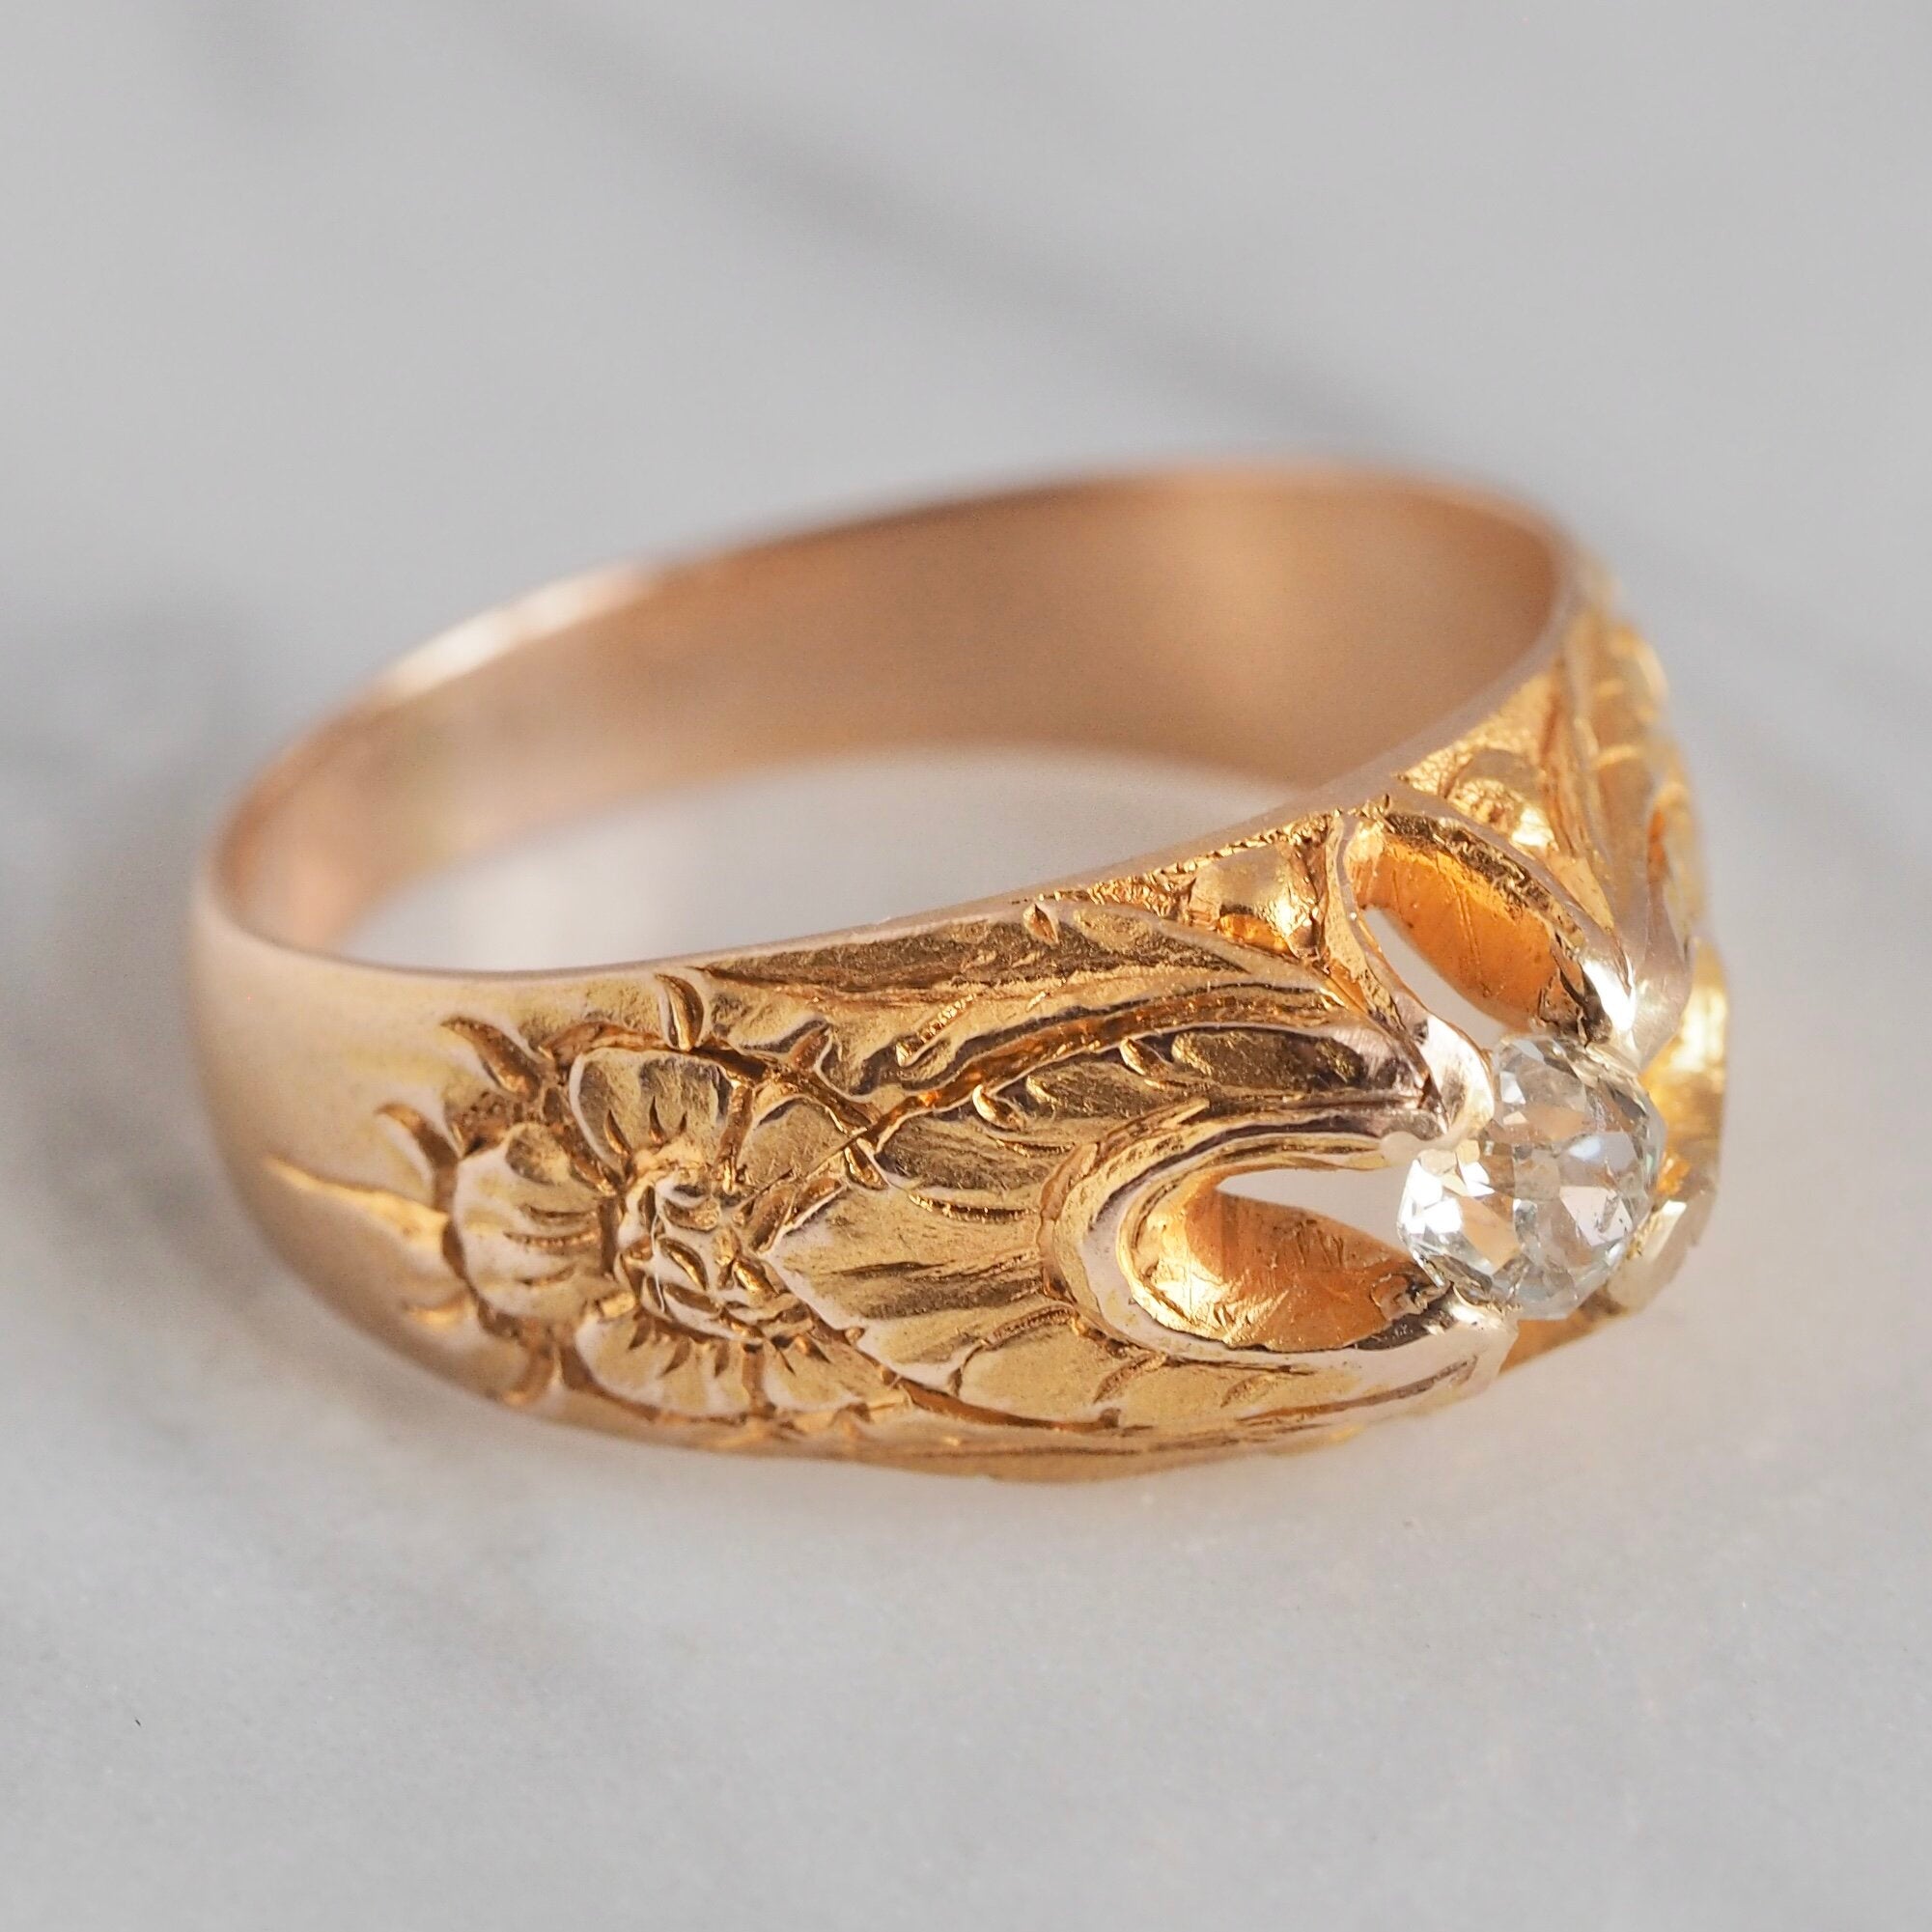 Art Nouveau 14k Gold Old Mine Cut Diamond Ring